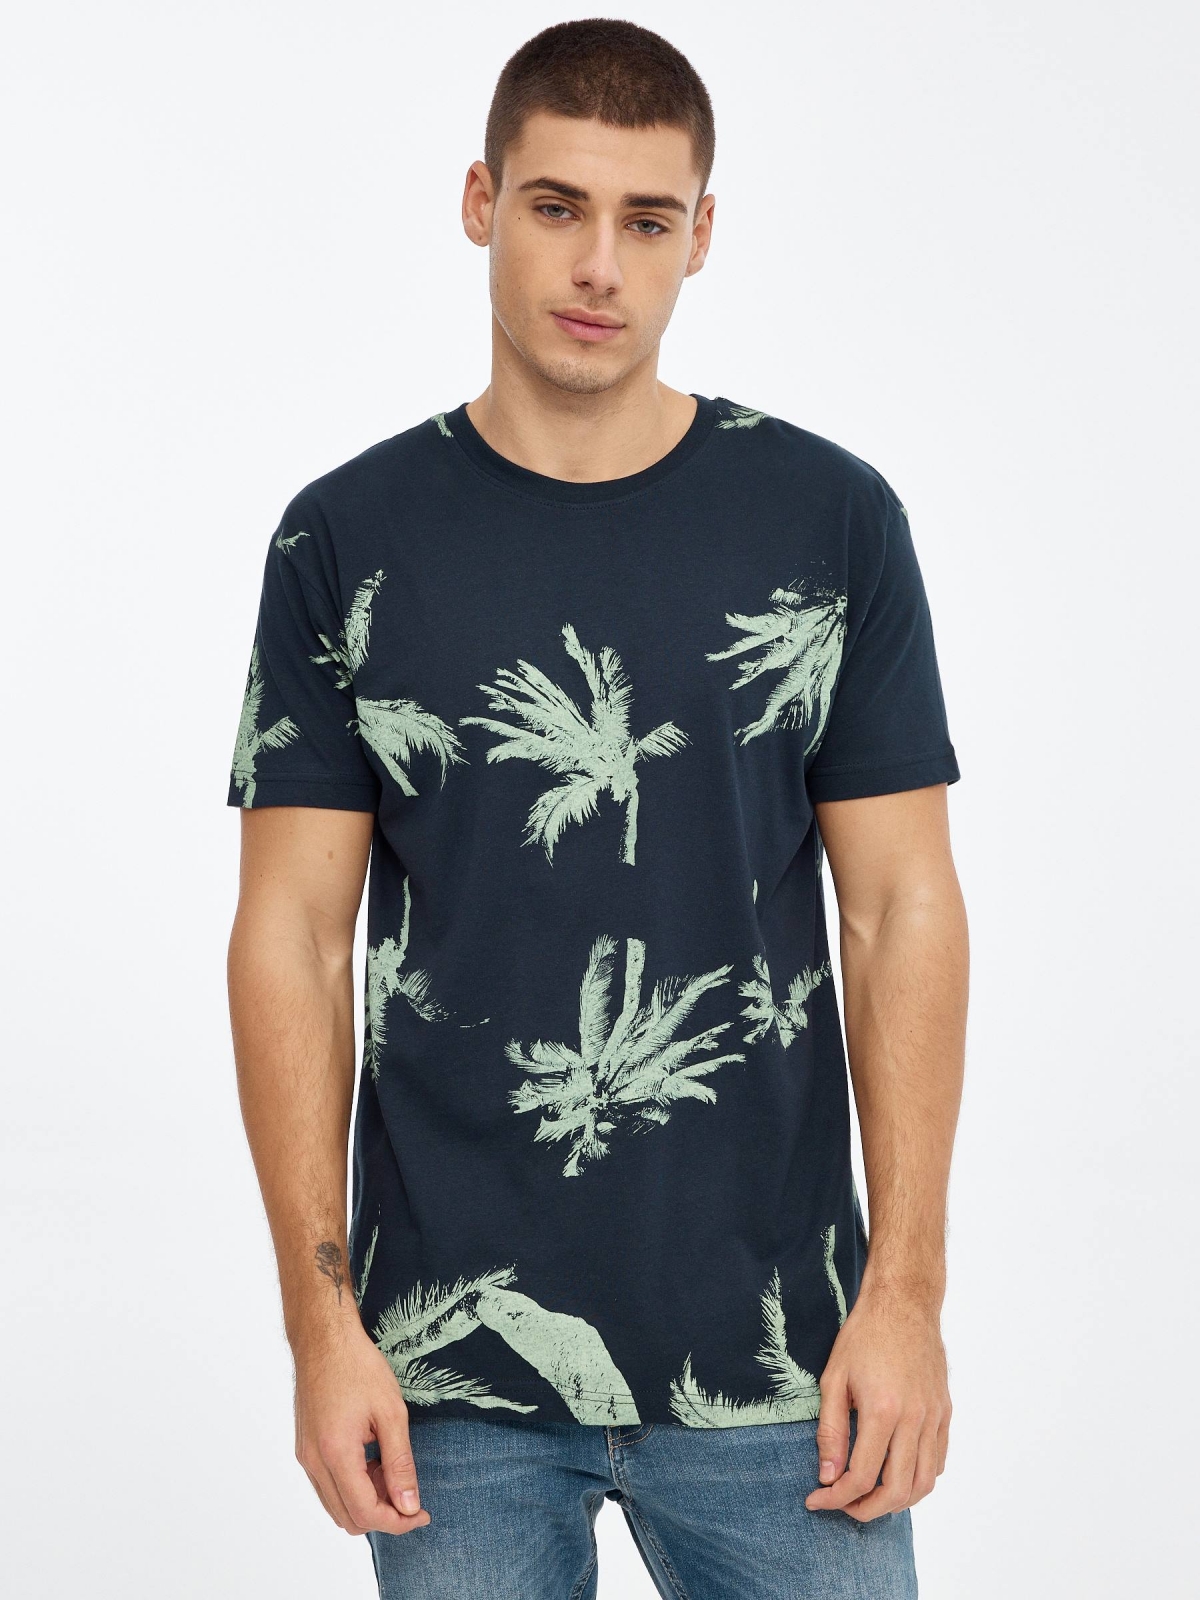 Camiseta estampado palmeras azul marino vista media frontal